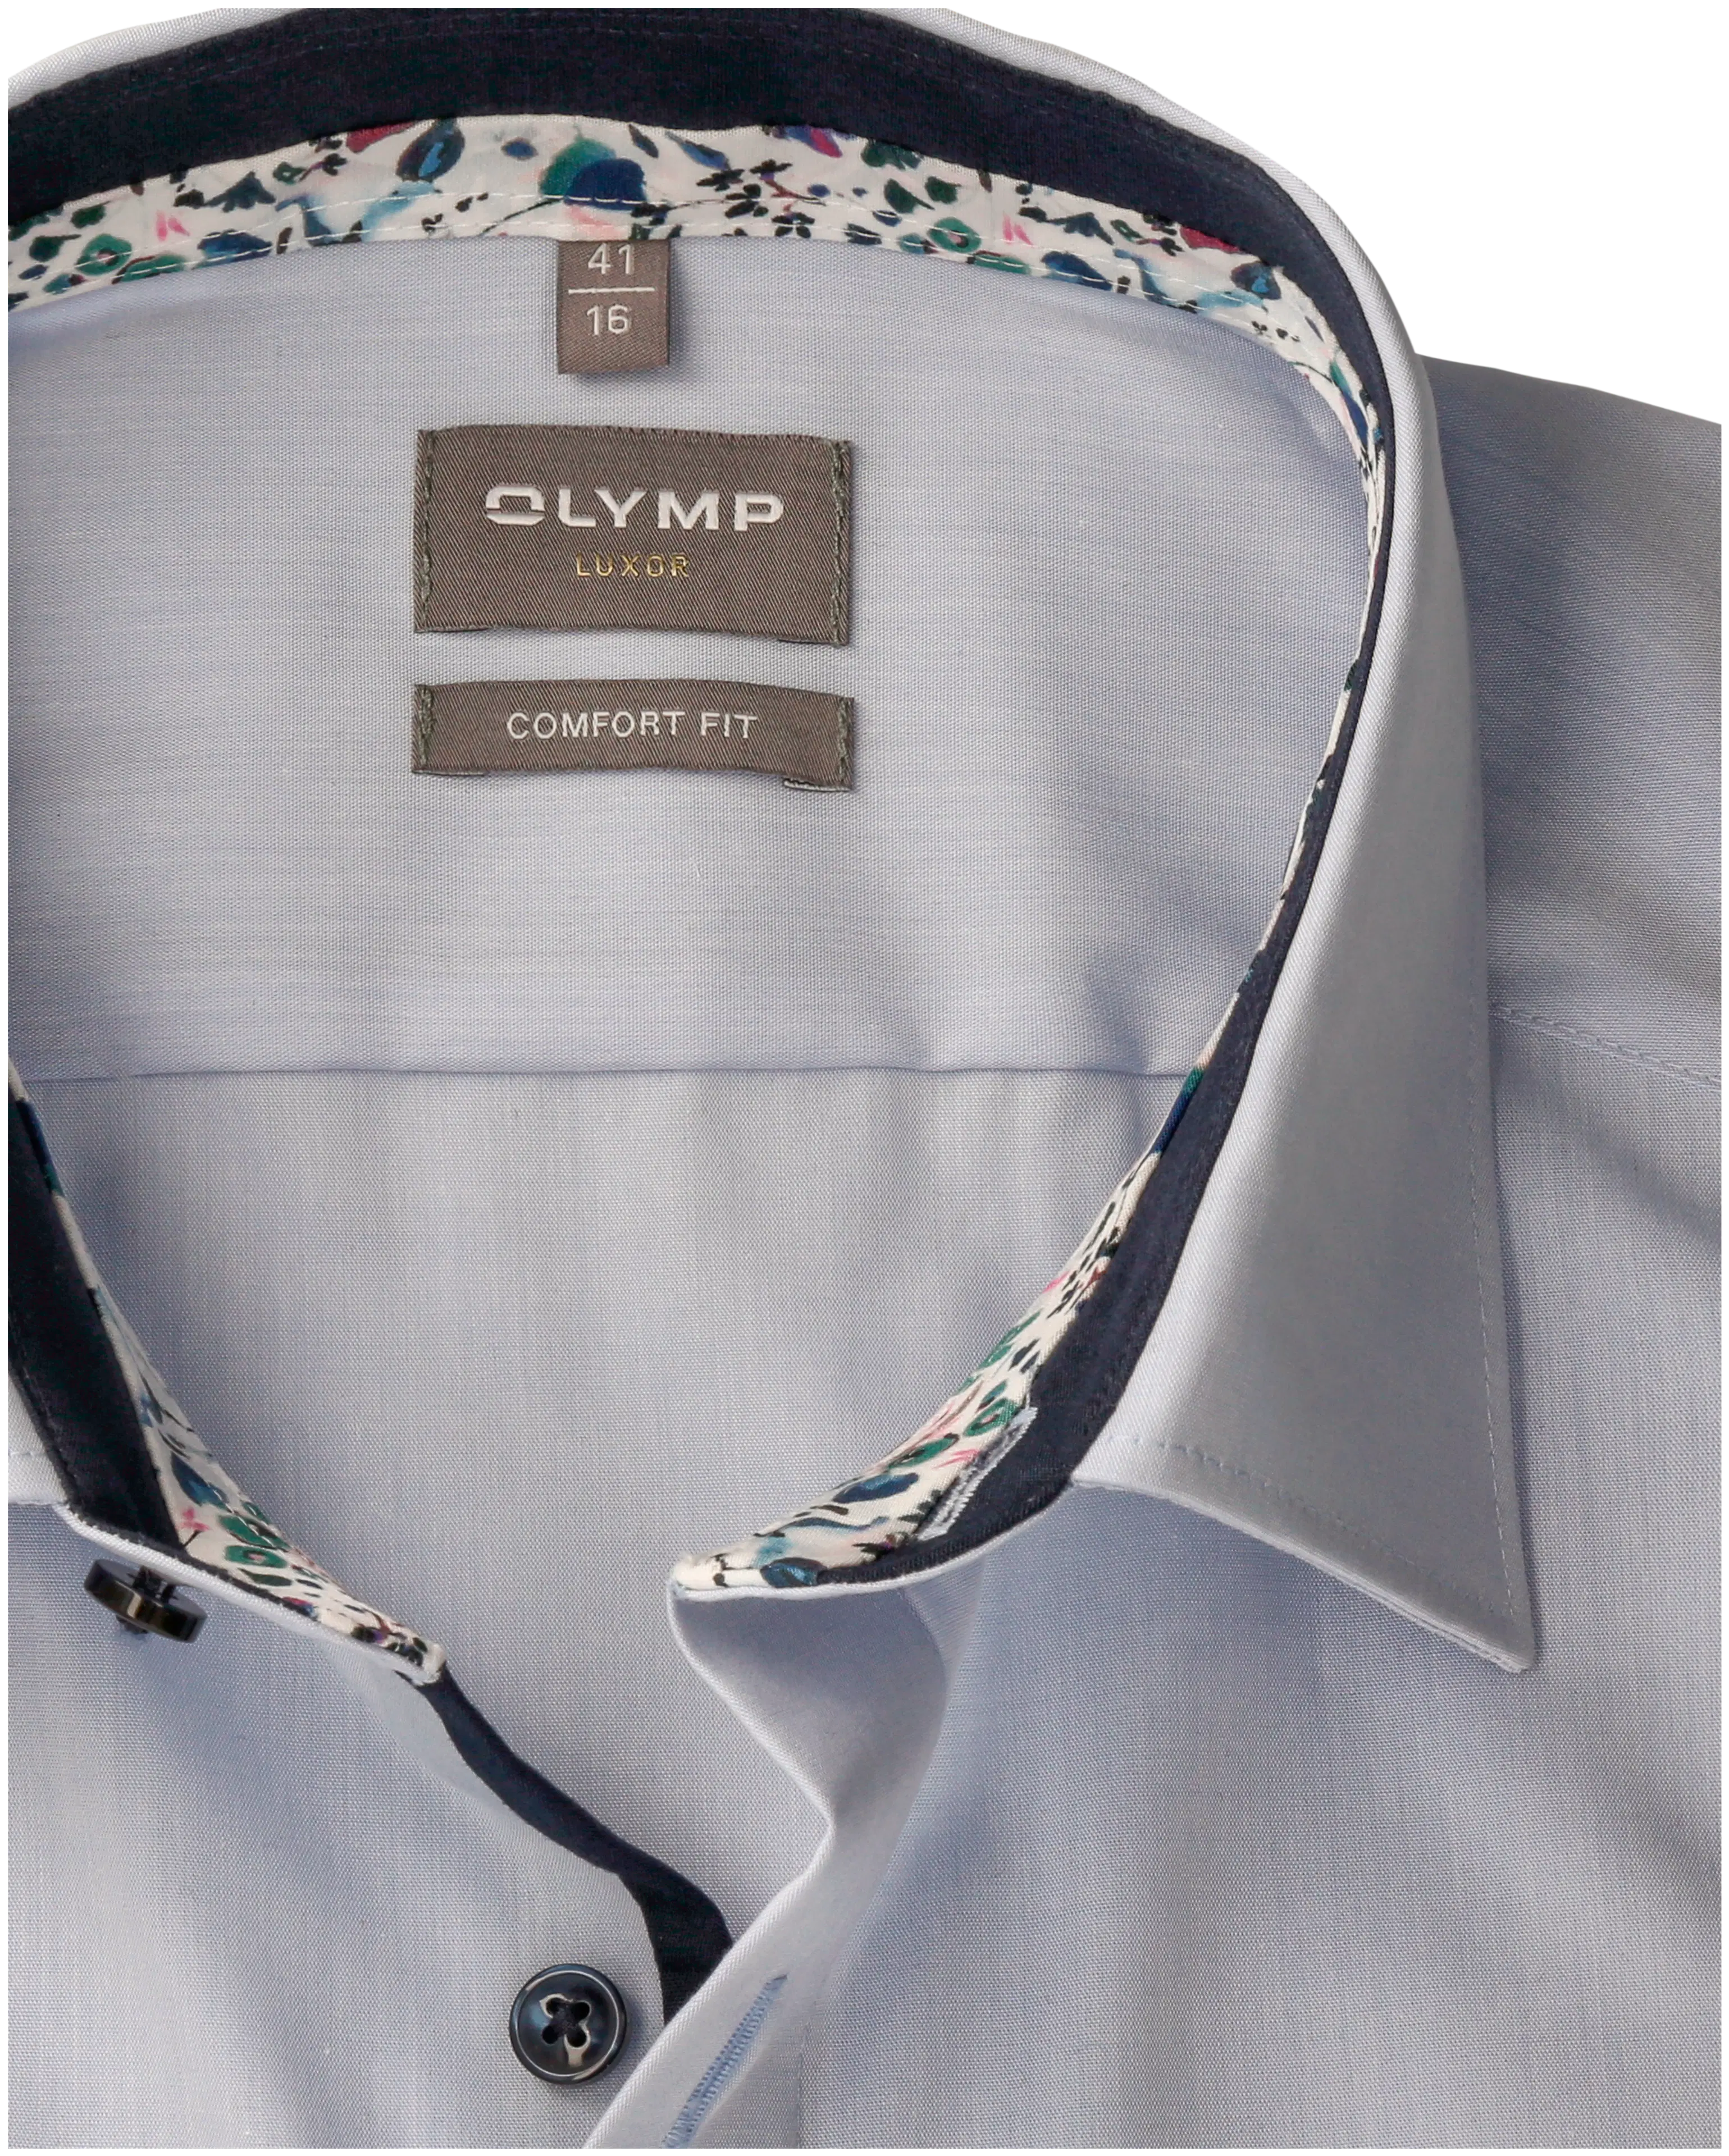 Olymp Luxor Comfort Fit kauluspaita